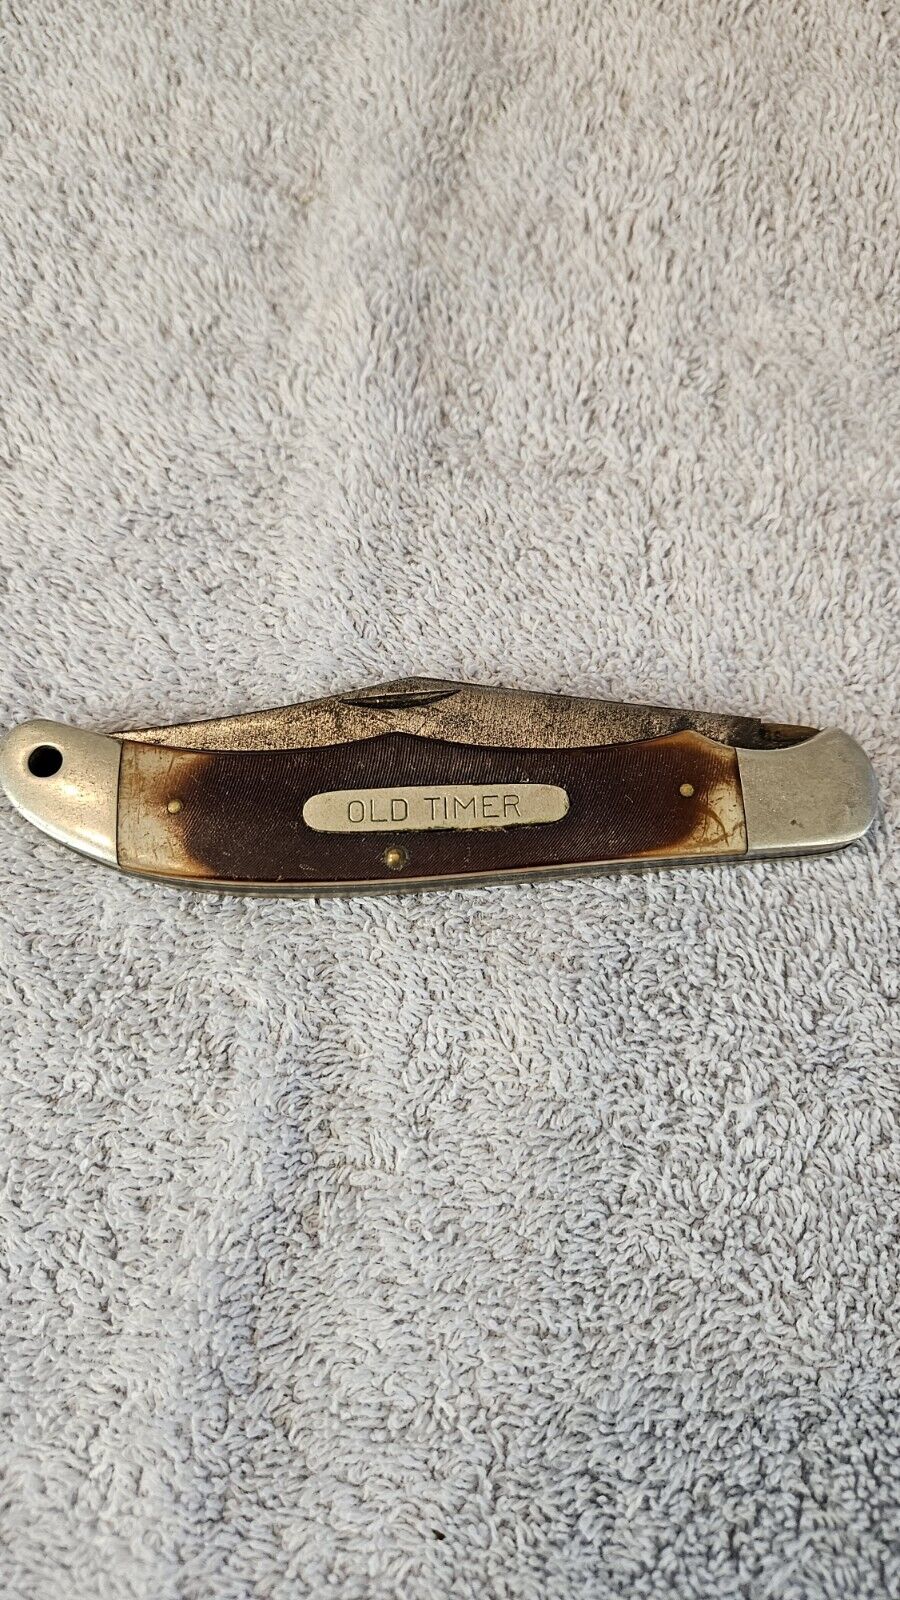 AUTHENTIC SCHRADE OLD TIMER 1250T SINGLE BLADE FOLDING LOCKING POCKET KNIFE 